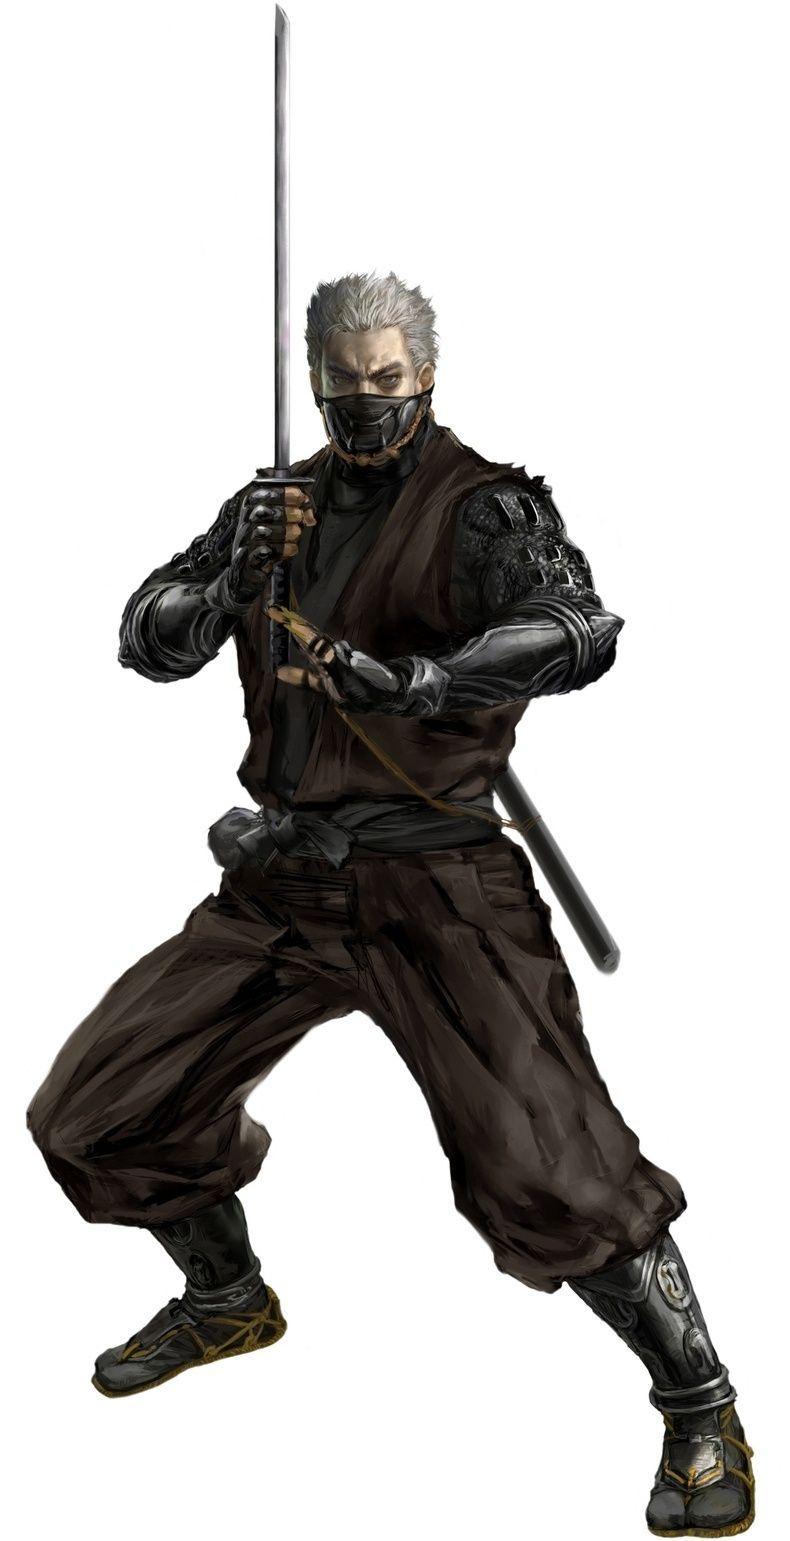 Rikimaru (Tenchu 4) should be played by the masked baddie in Rurouni